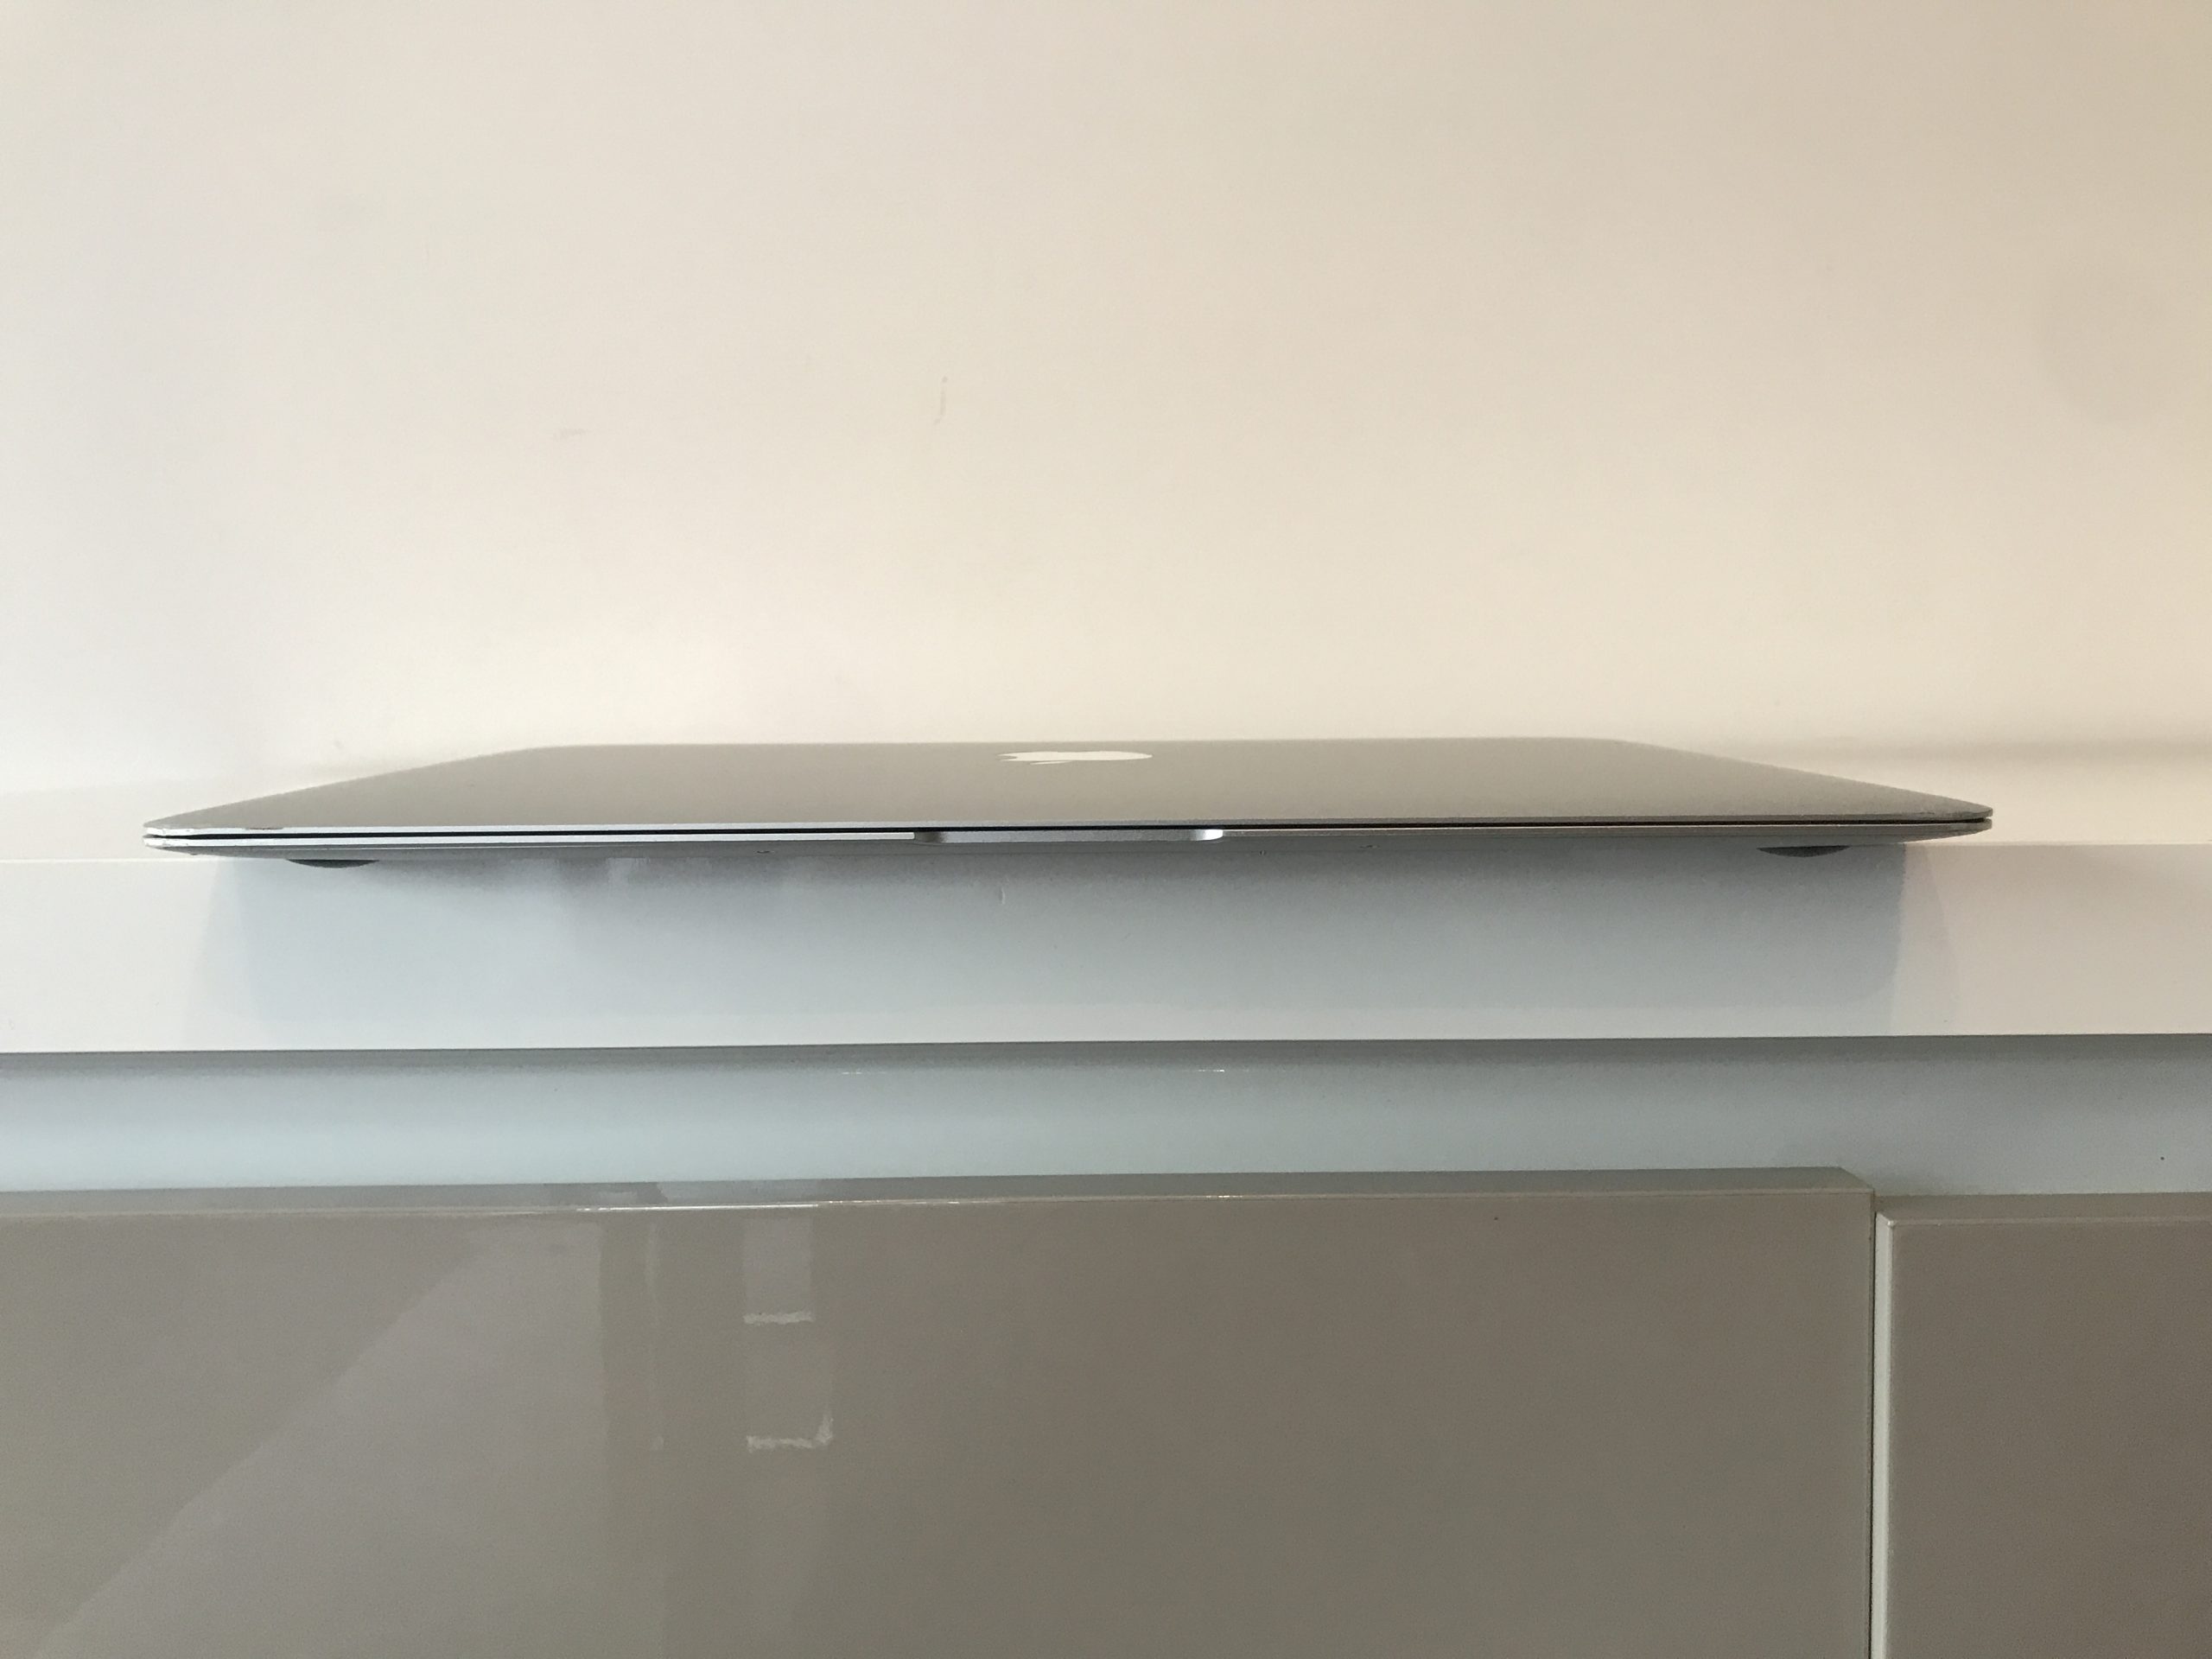 MacBook Air 13″ – Core i5 – SSD 256Go – RAM 8Go